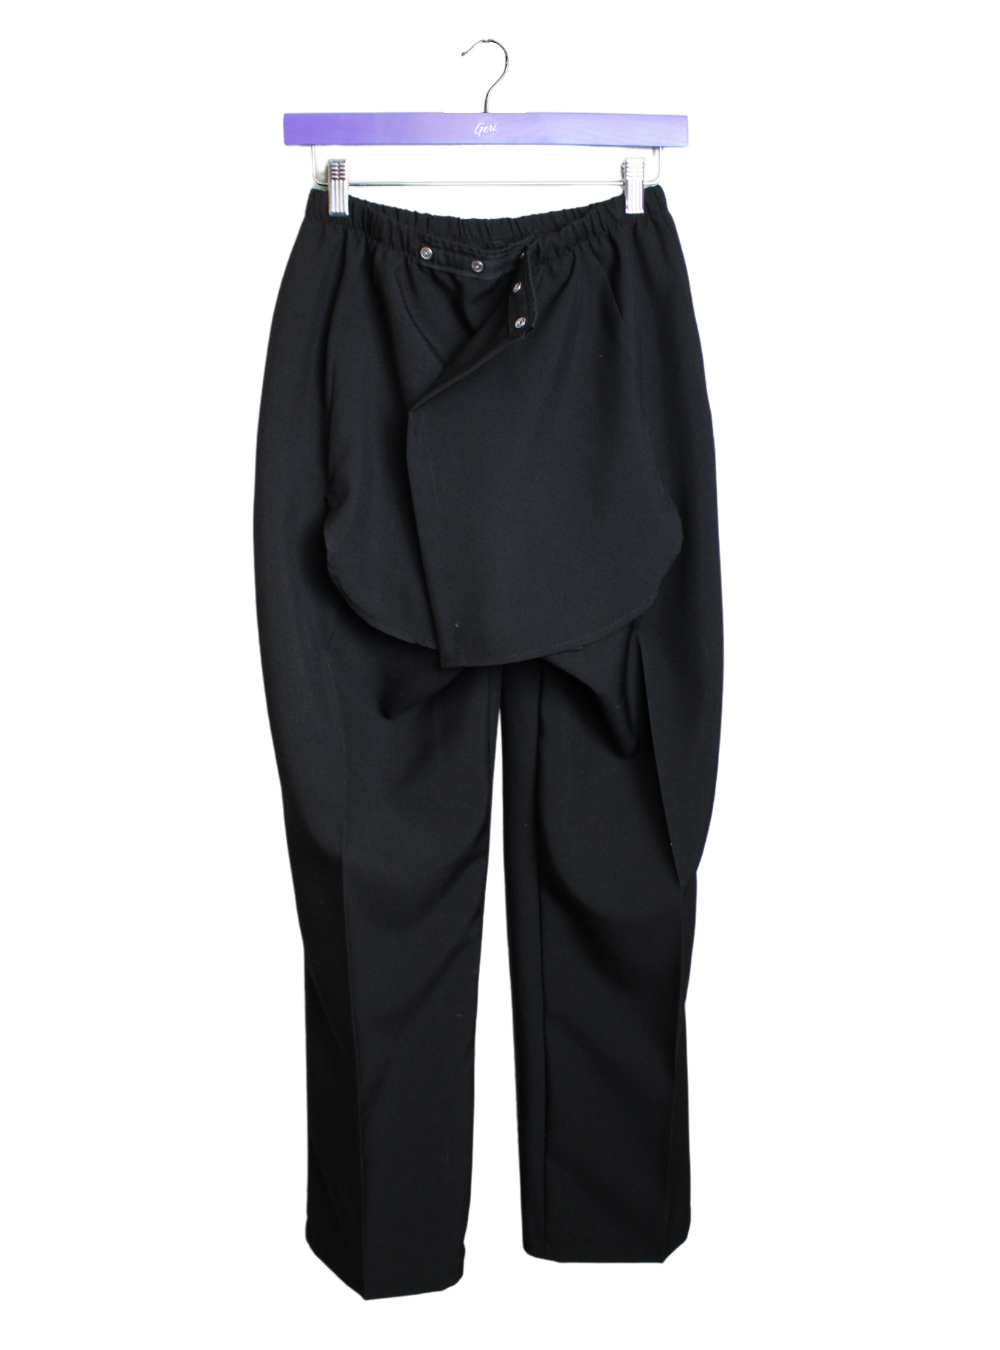 Capri Length Printed Back-Zip Sleep Suit Adaptive Clothing for Seniors,  Disabled & Elderly Care